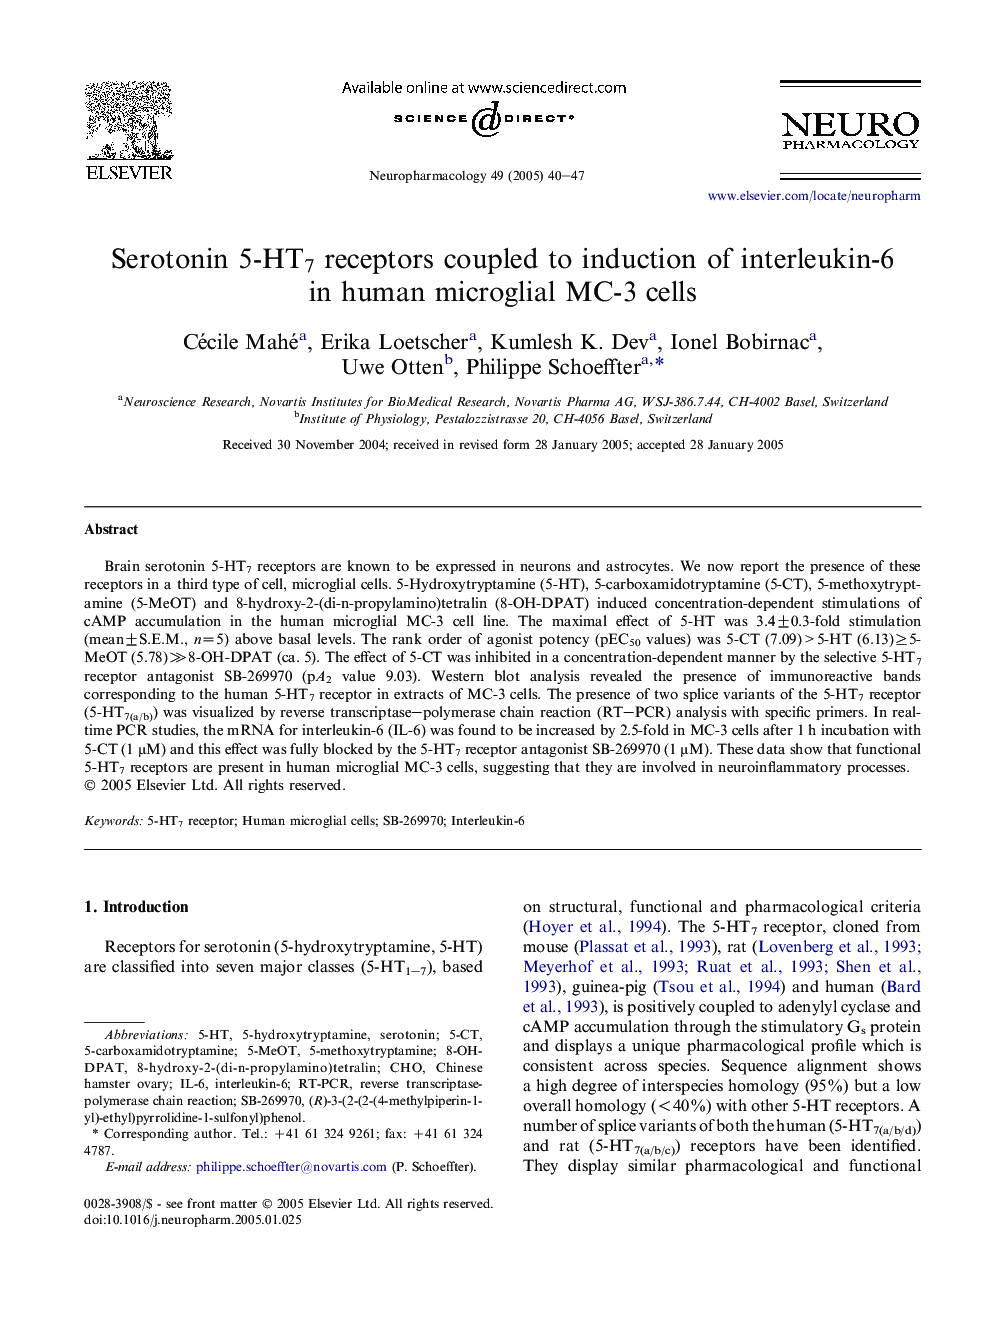 Serotonin 5-HT7 receptors coupled to induction of interleukin-6 in human microglial MC-3 cells